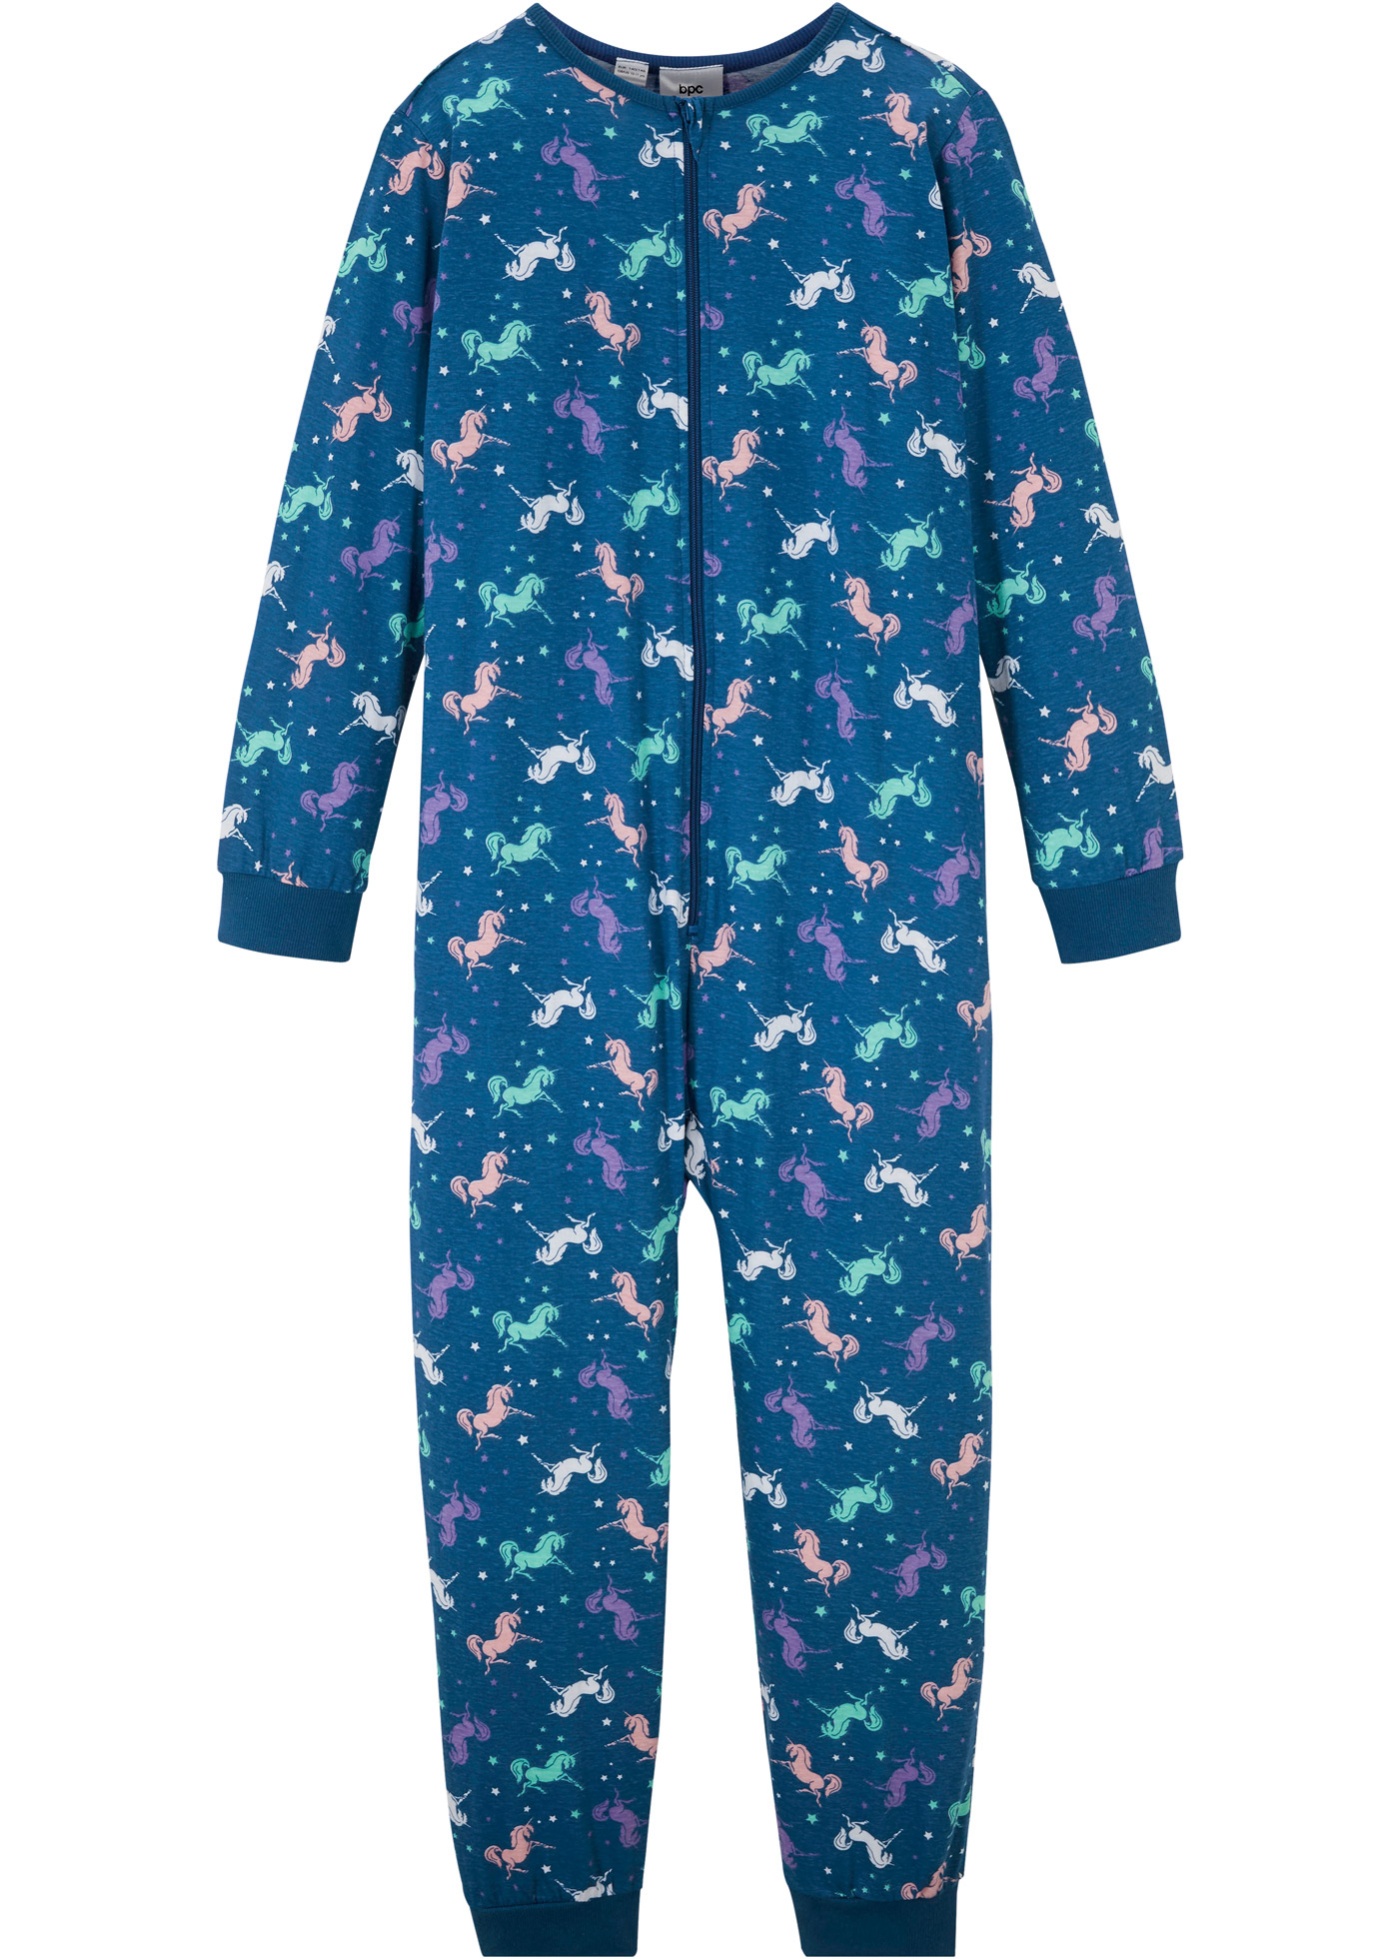 Meisjes pyjama onesie met poppenpyjama (2-dlg. set)